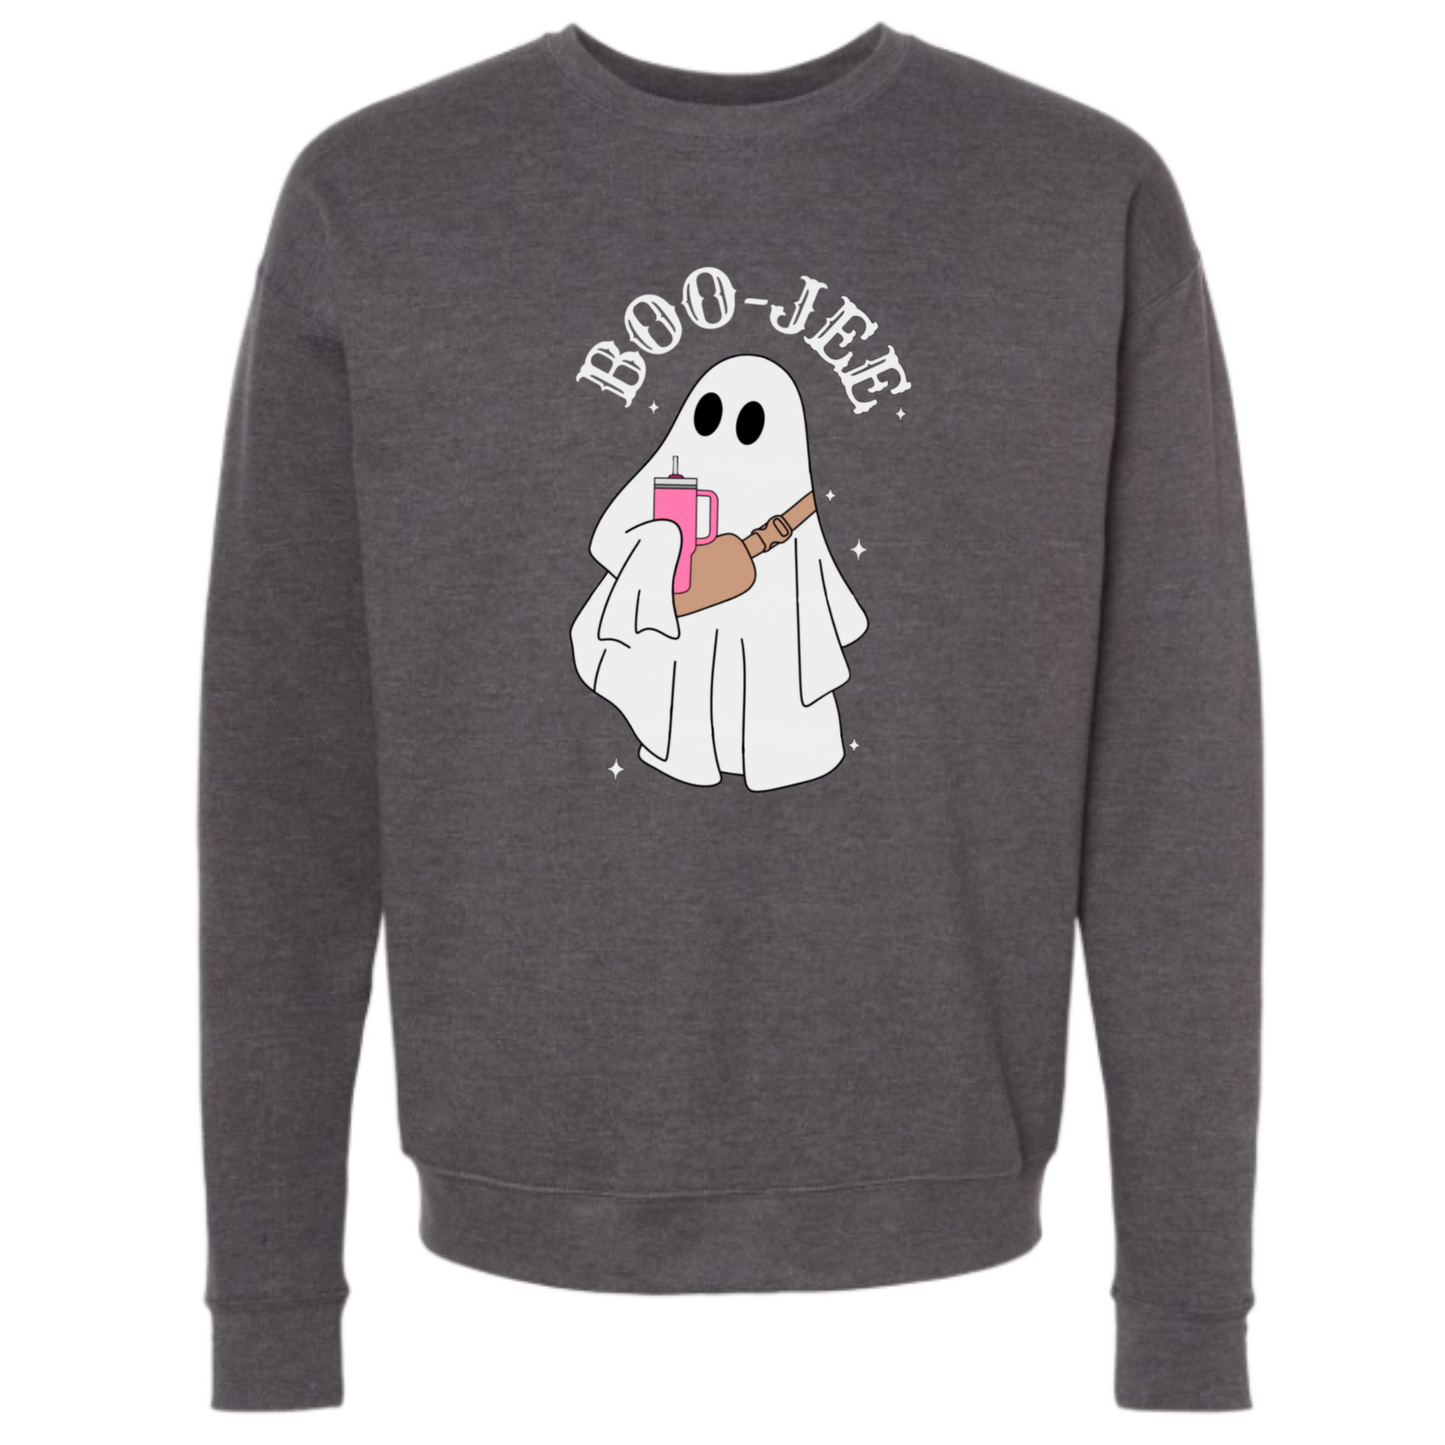 Boo-jee Spooky Season Crewneck Sweatshirt